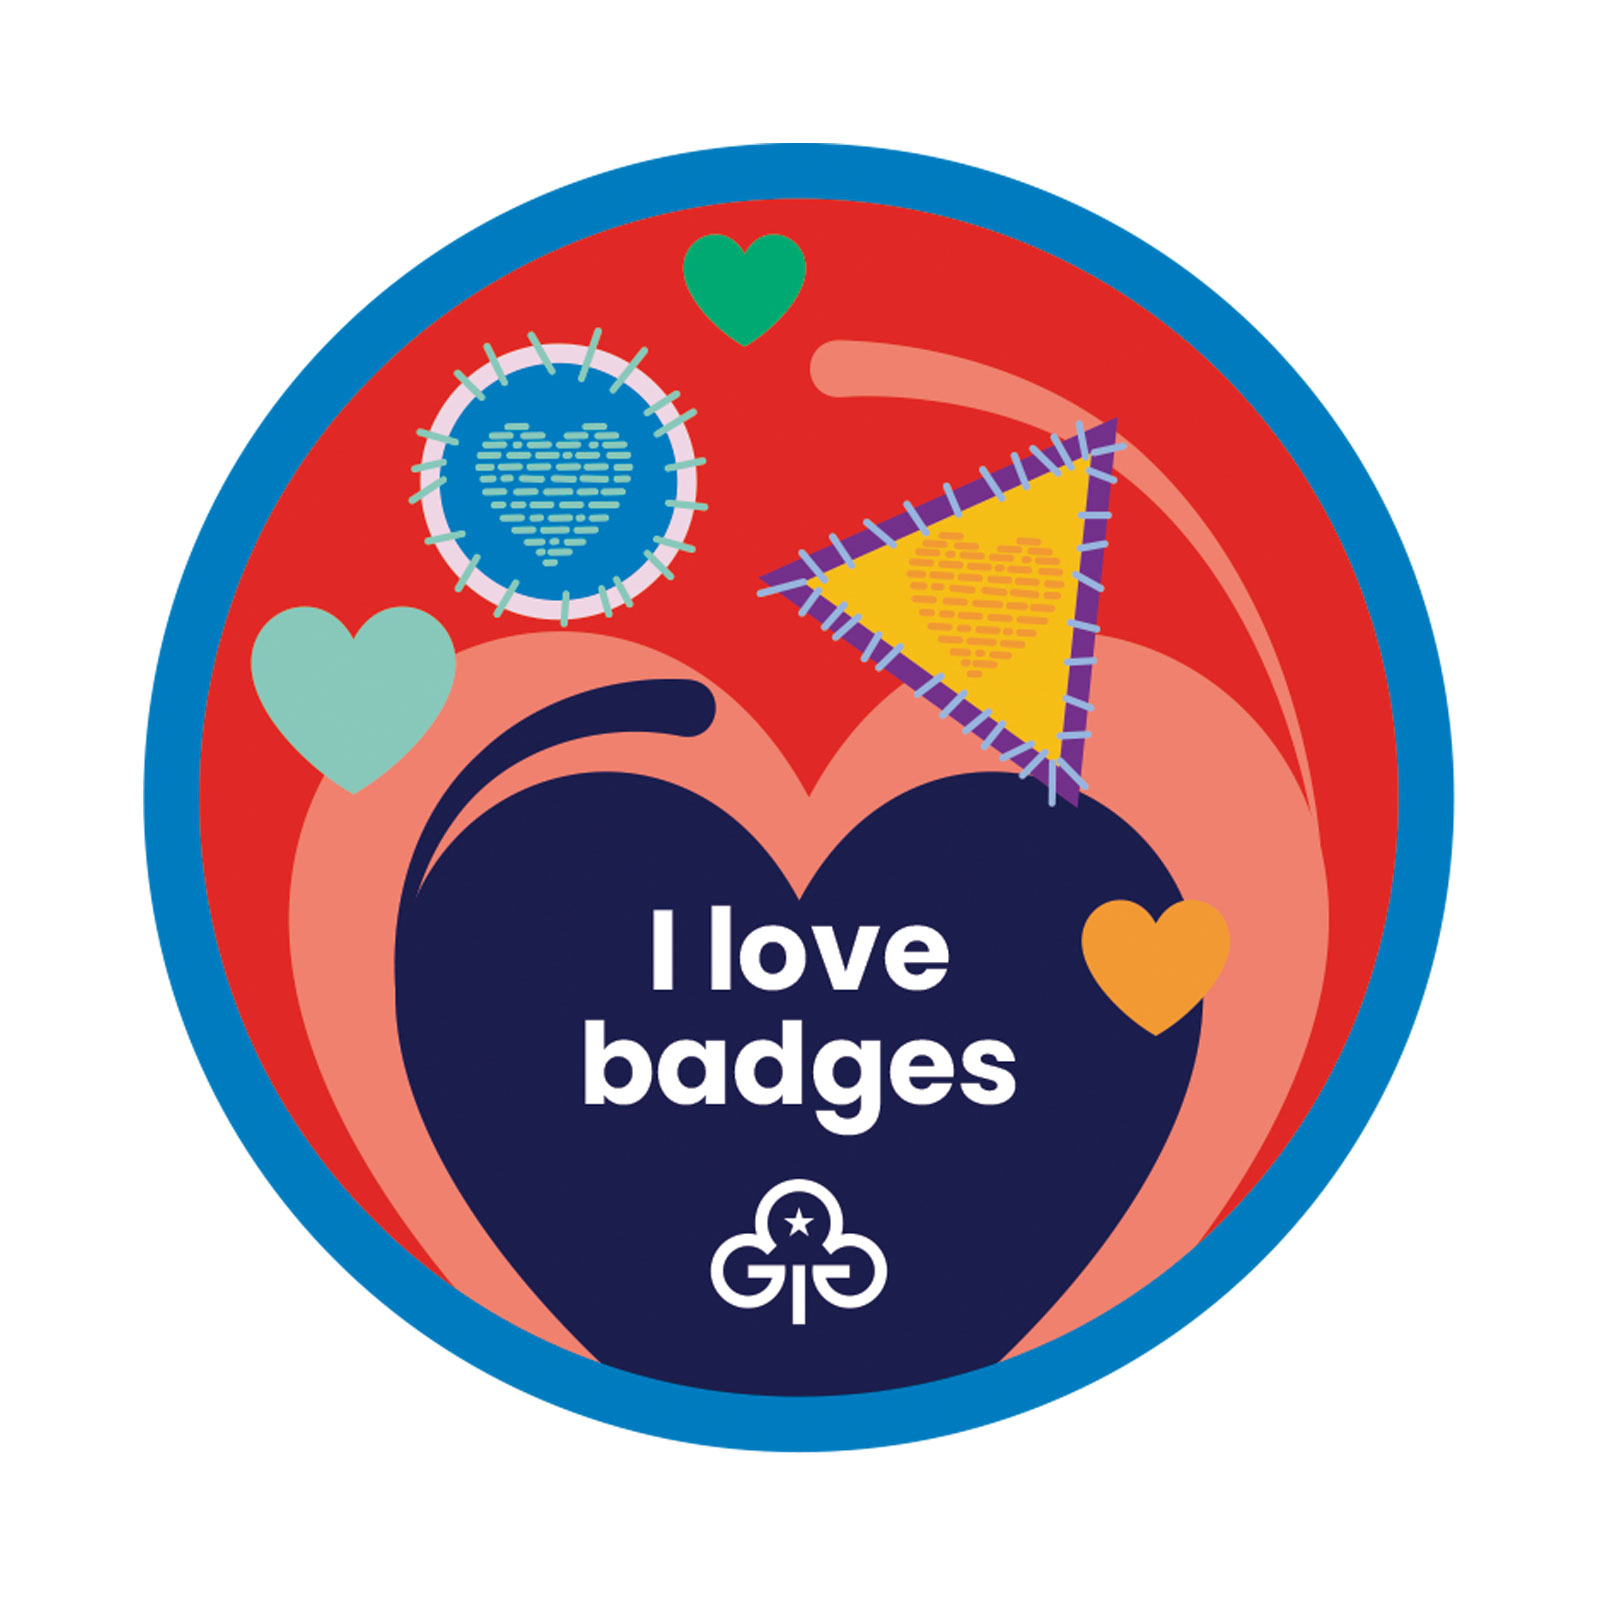 I love badges badge (N) - Girlguiding Anglia